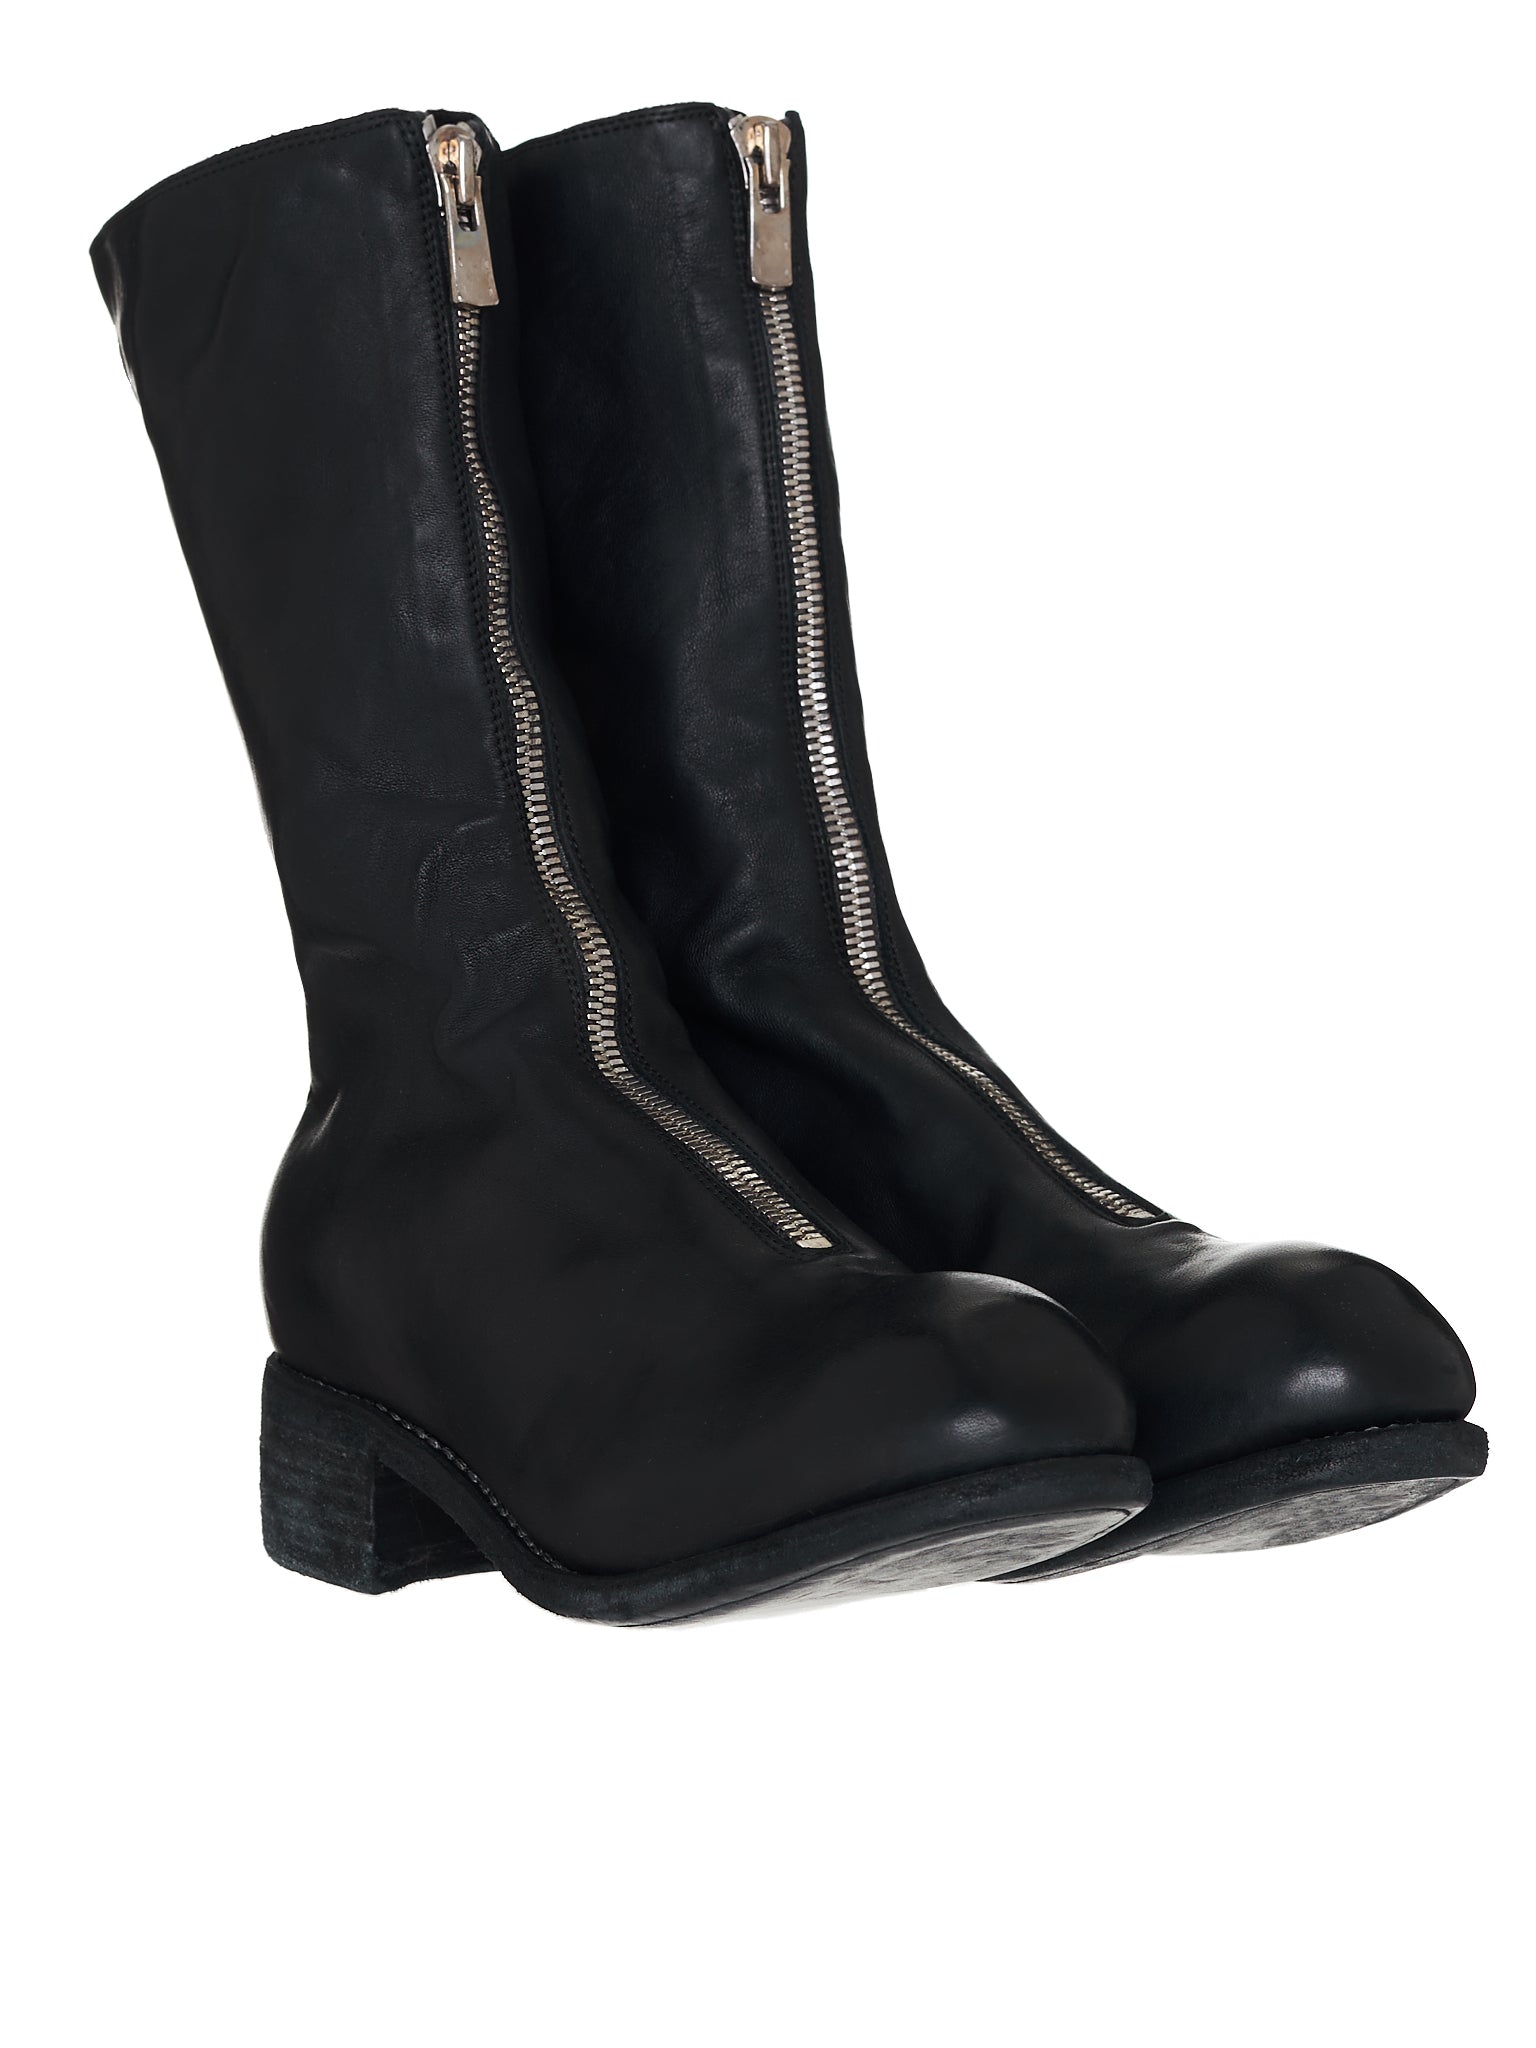 Guidi PL9 Boots | H.Lorenzo - detail 1